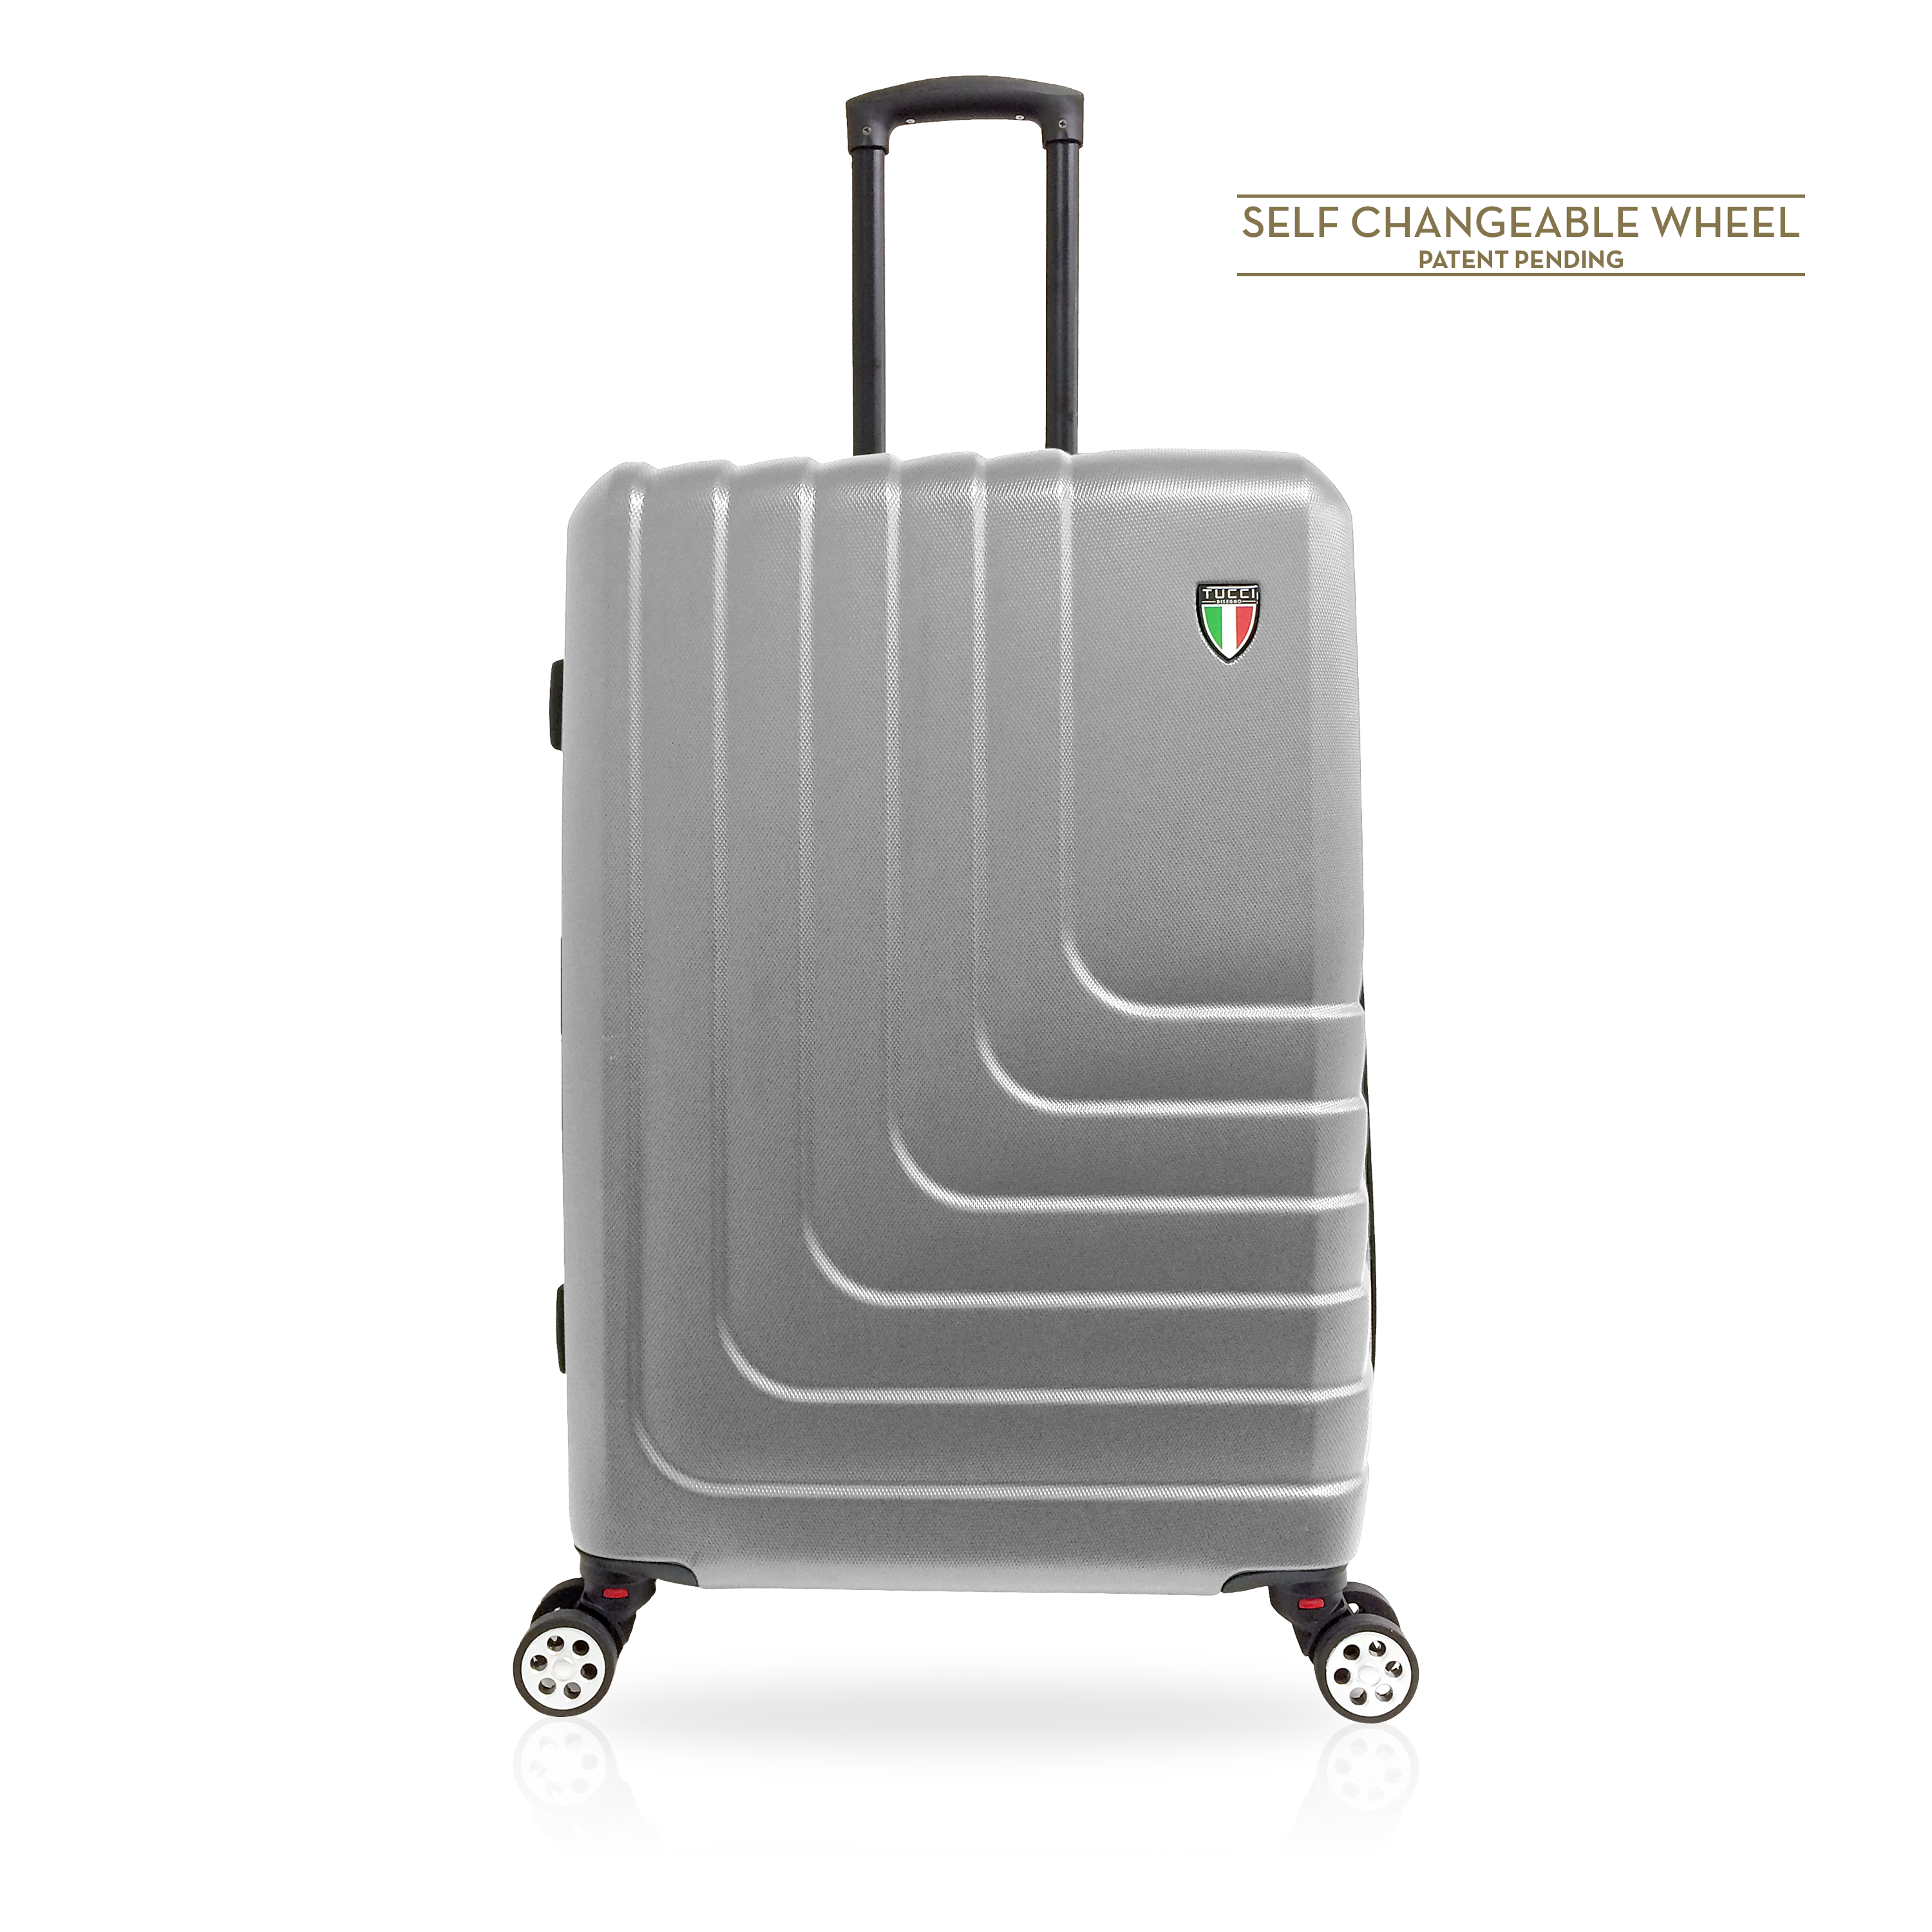 TUCCI Italy 22" CARINO Spinner Wheel Travel Luggage